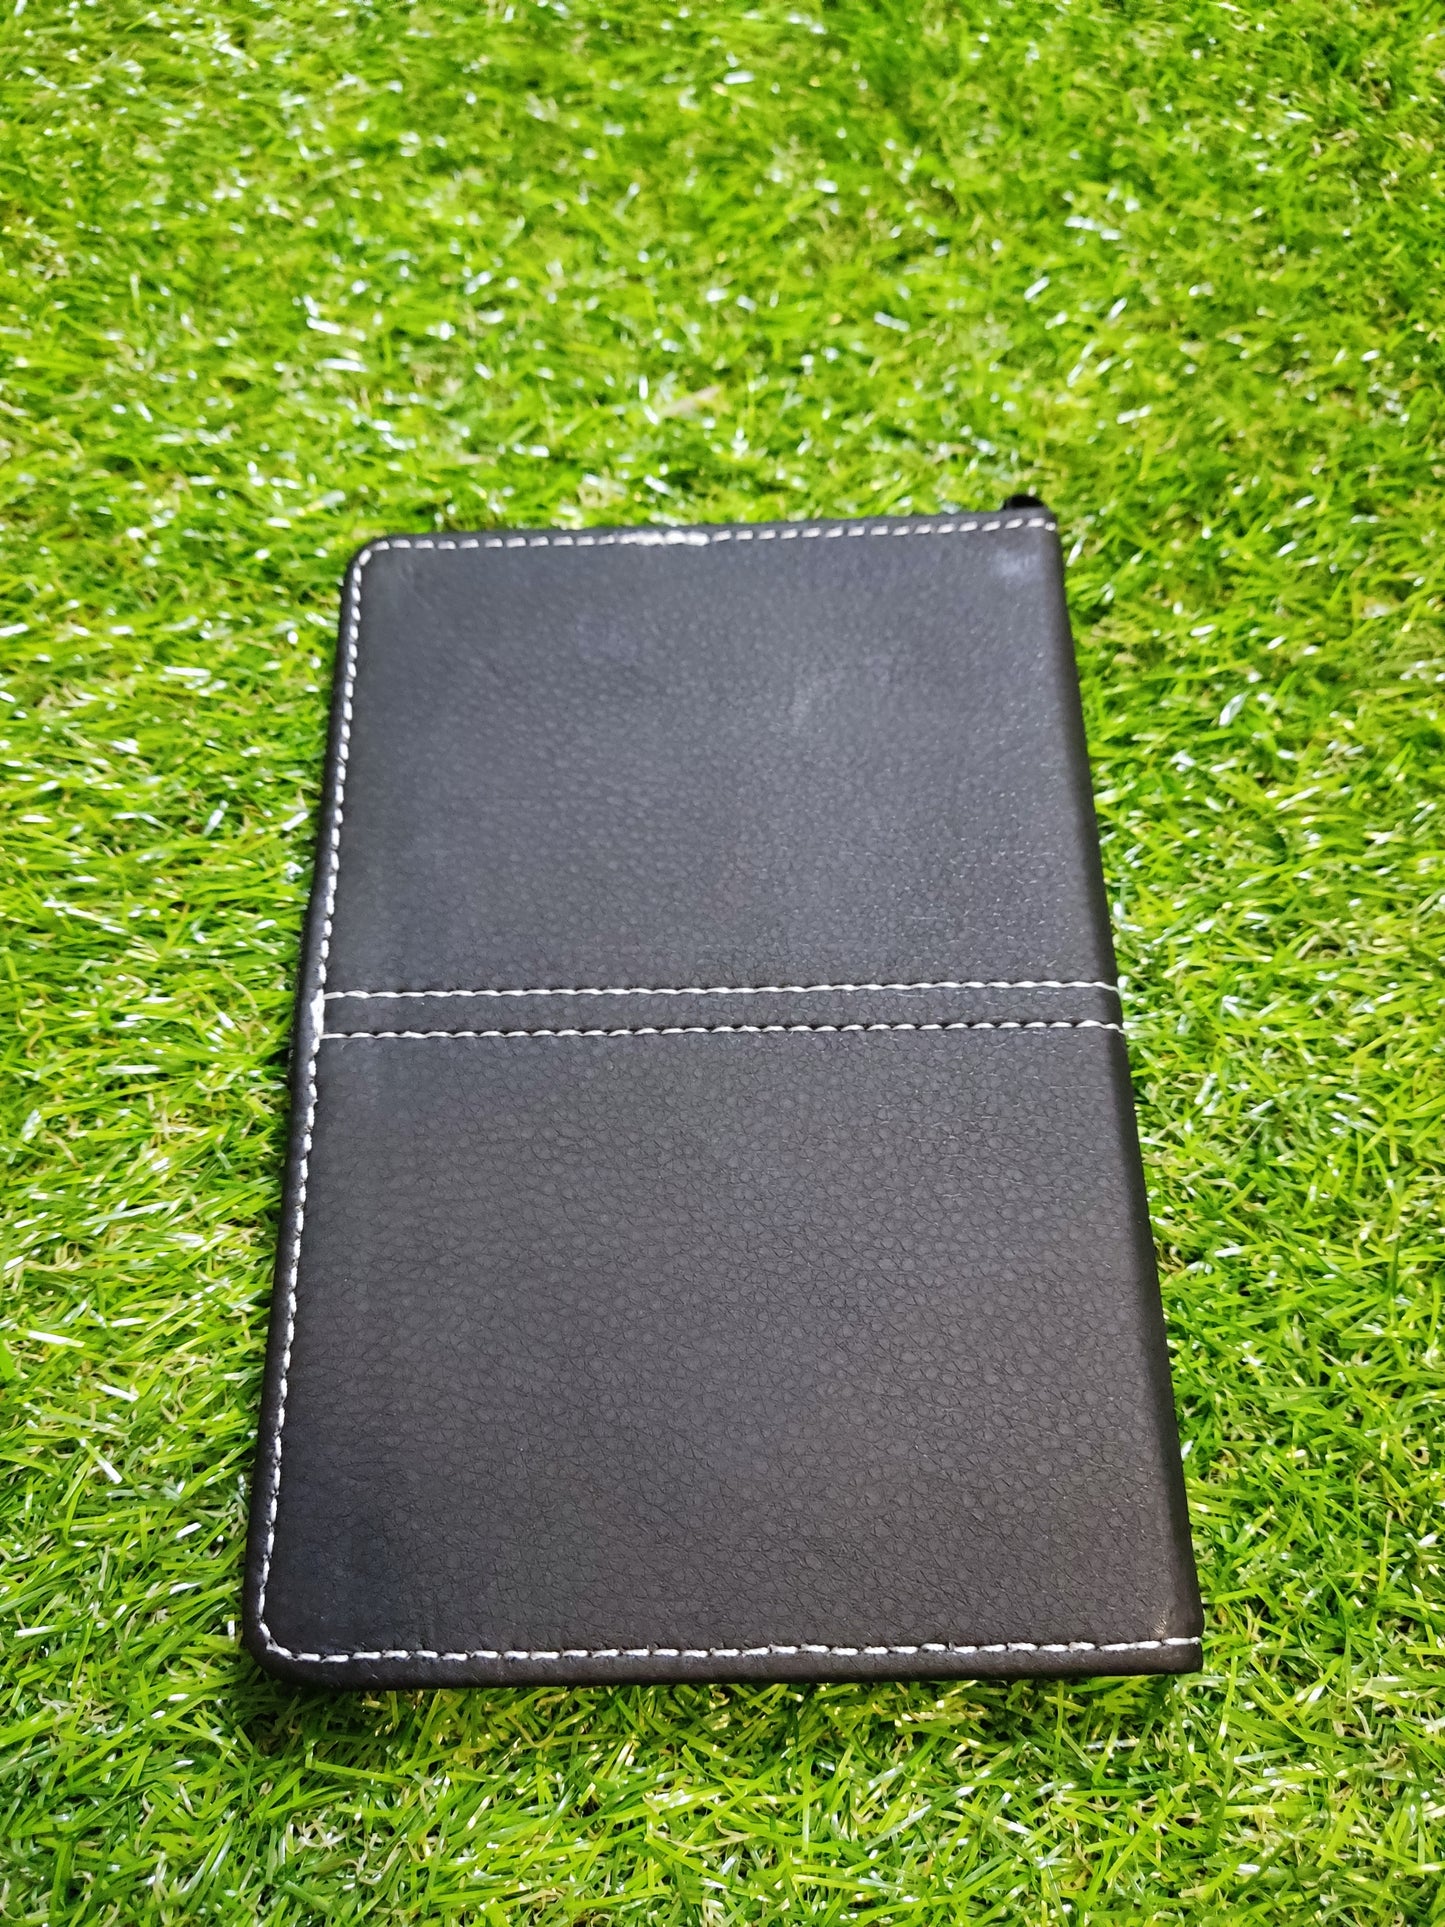 Golf Scorecard Score Card Holder Black PU Leather Magnetic Ball Marker Alignment